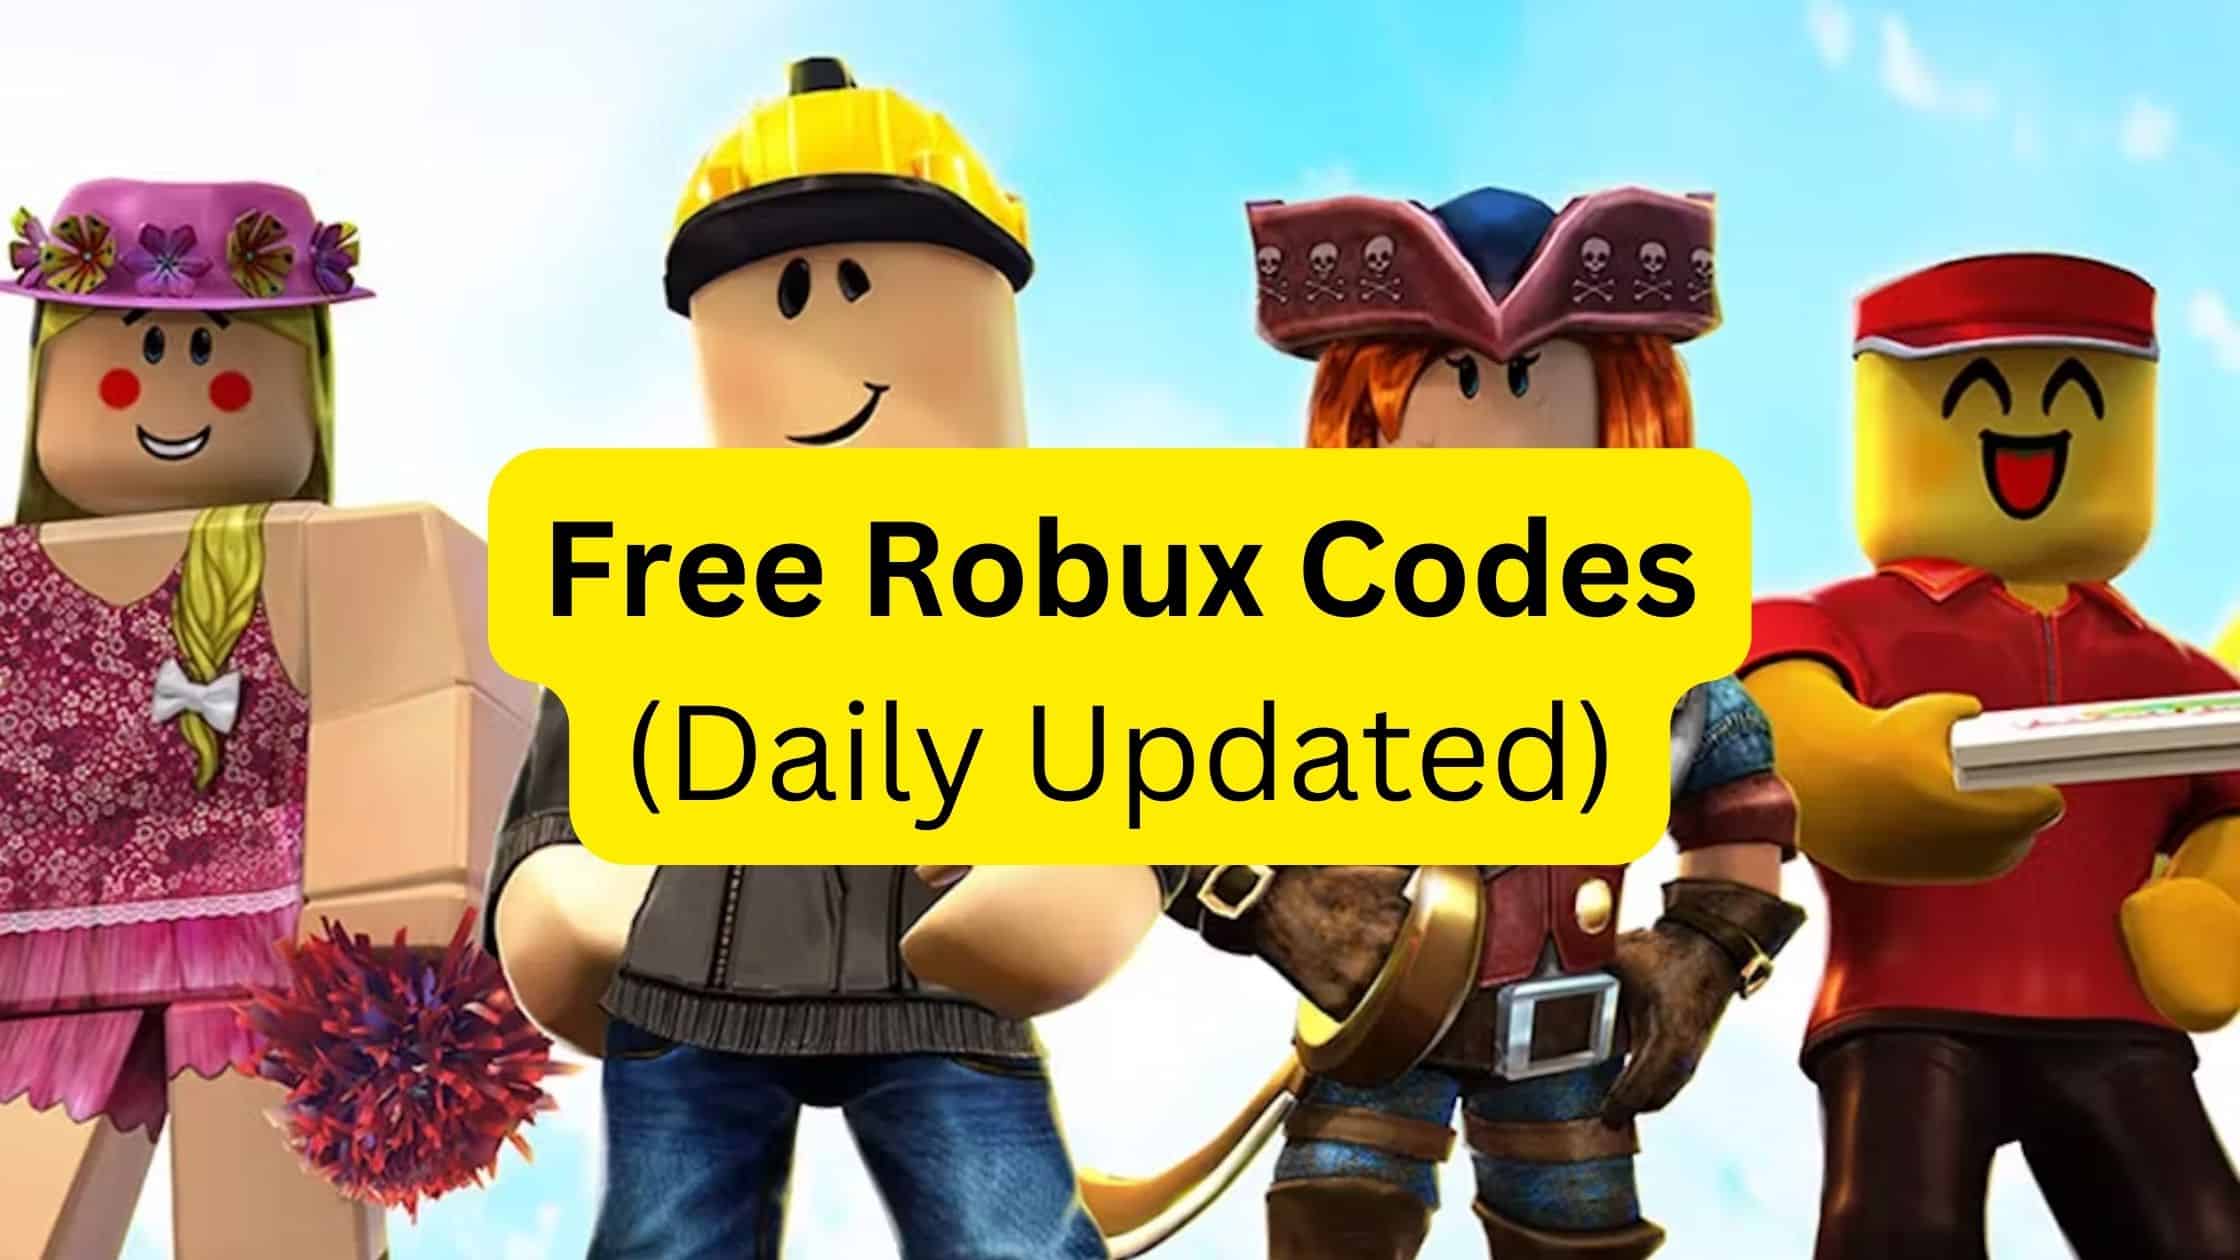 Free Robux Codes